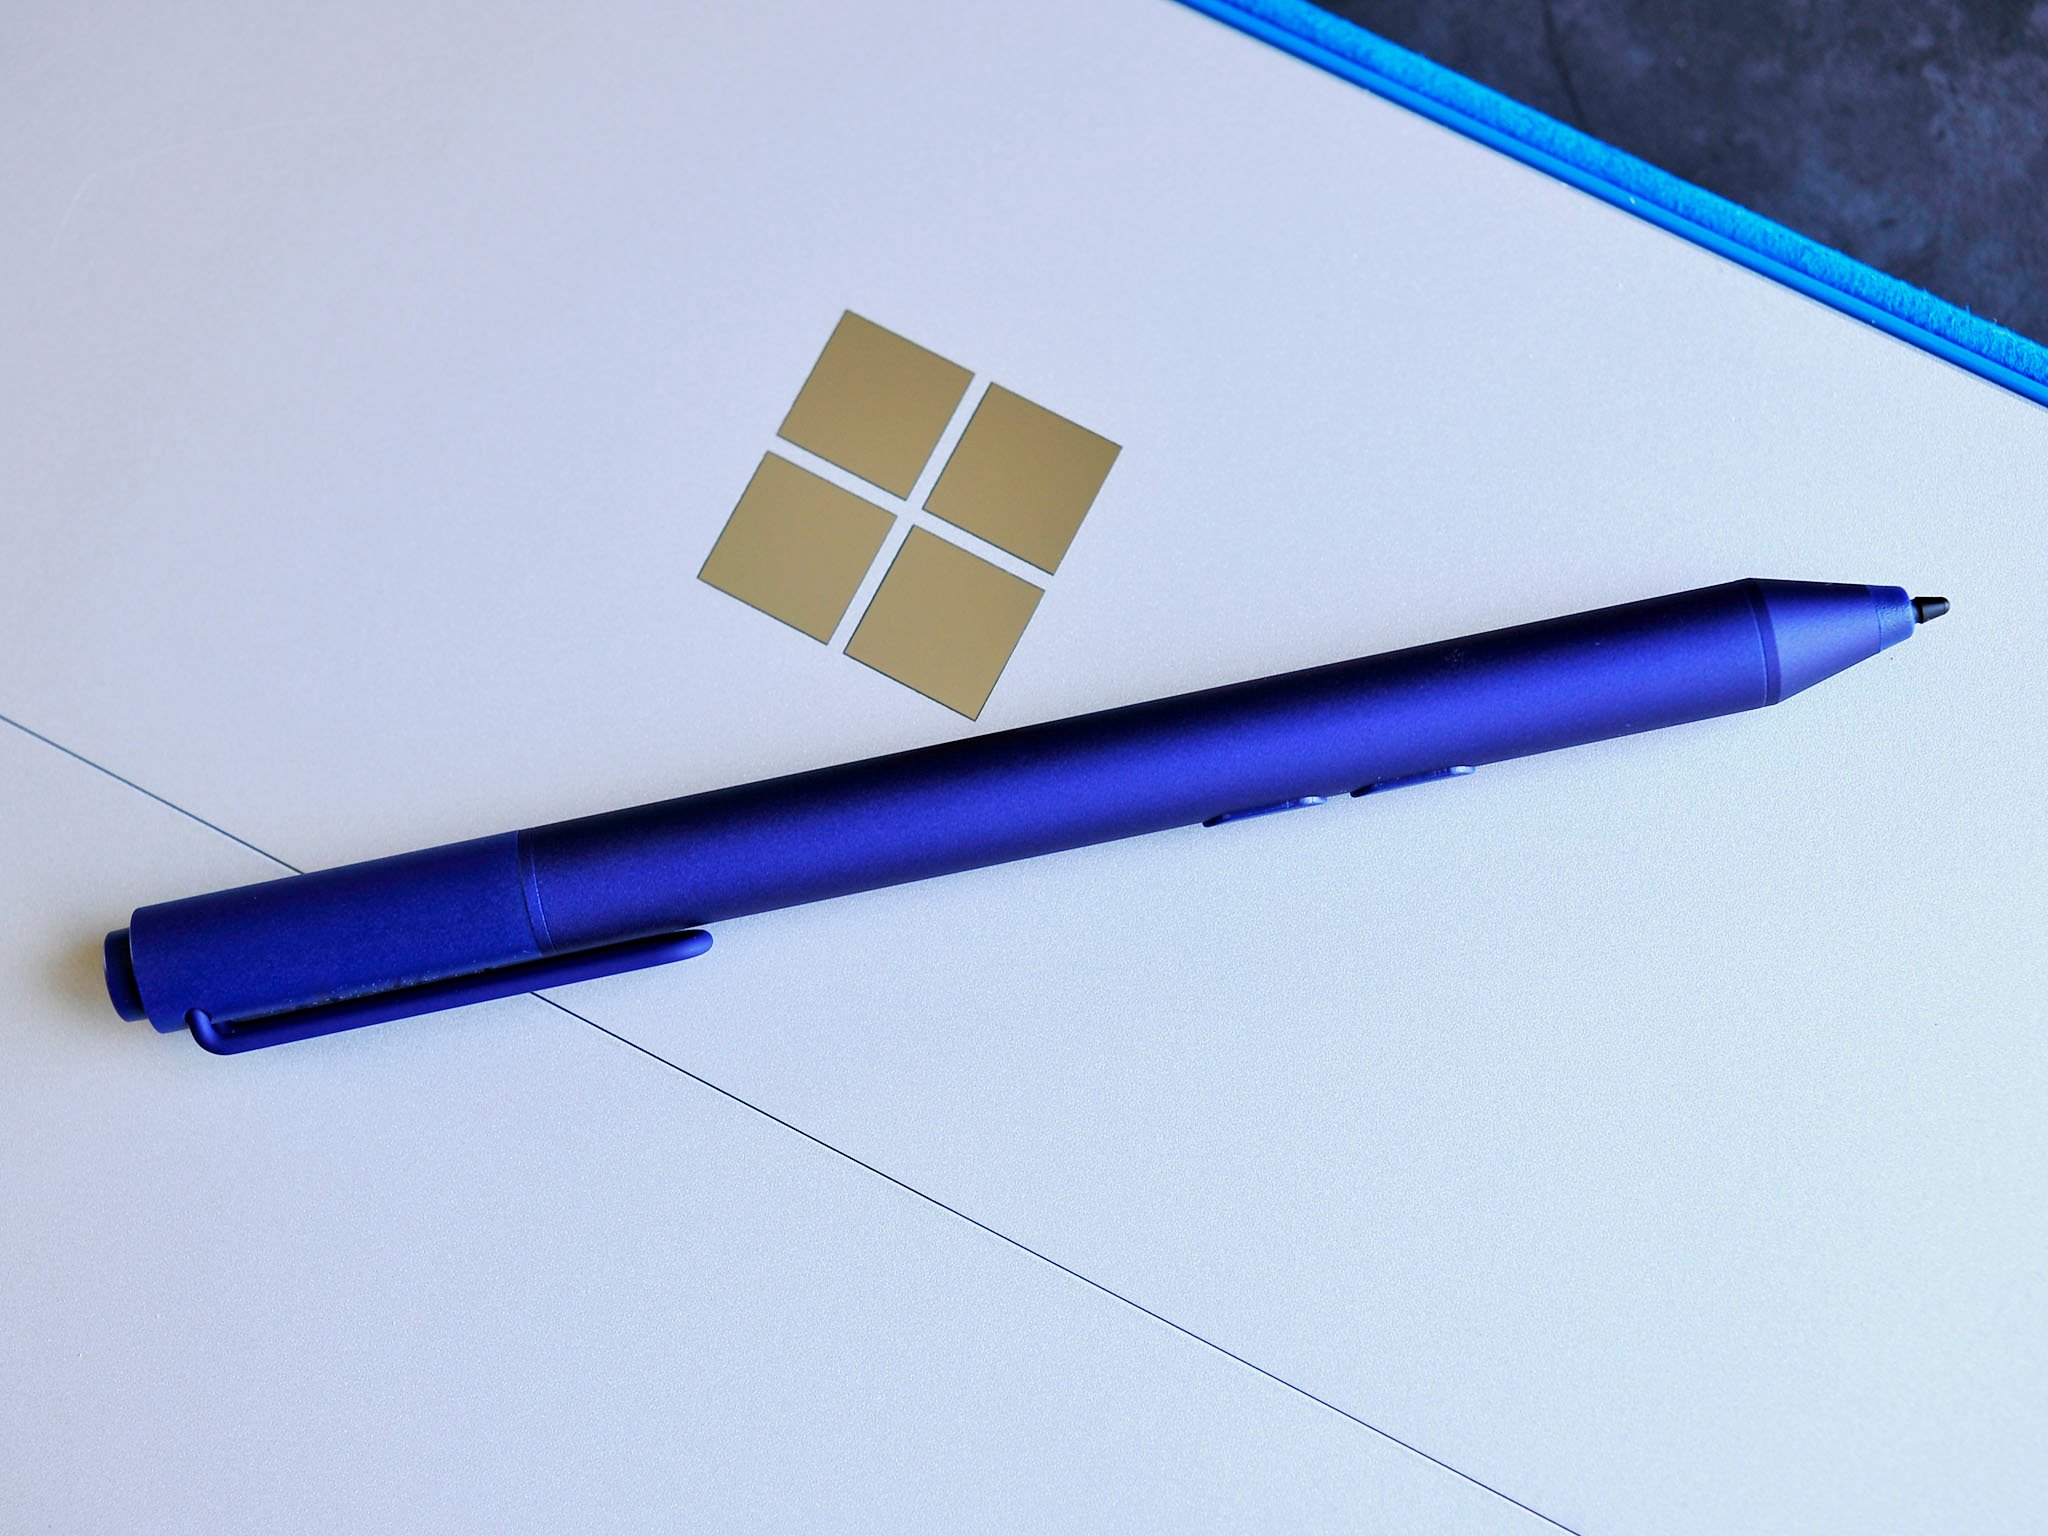 Microsoft surface pro 3 pen not writing it out but writing